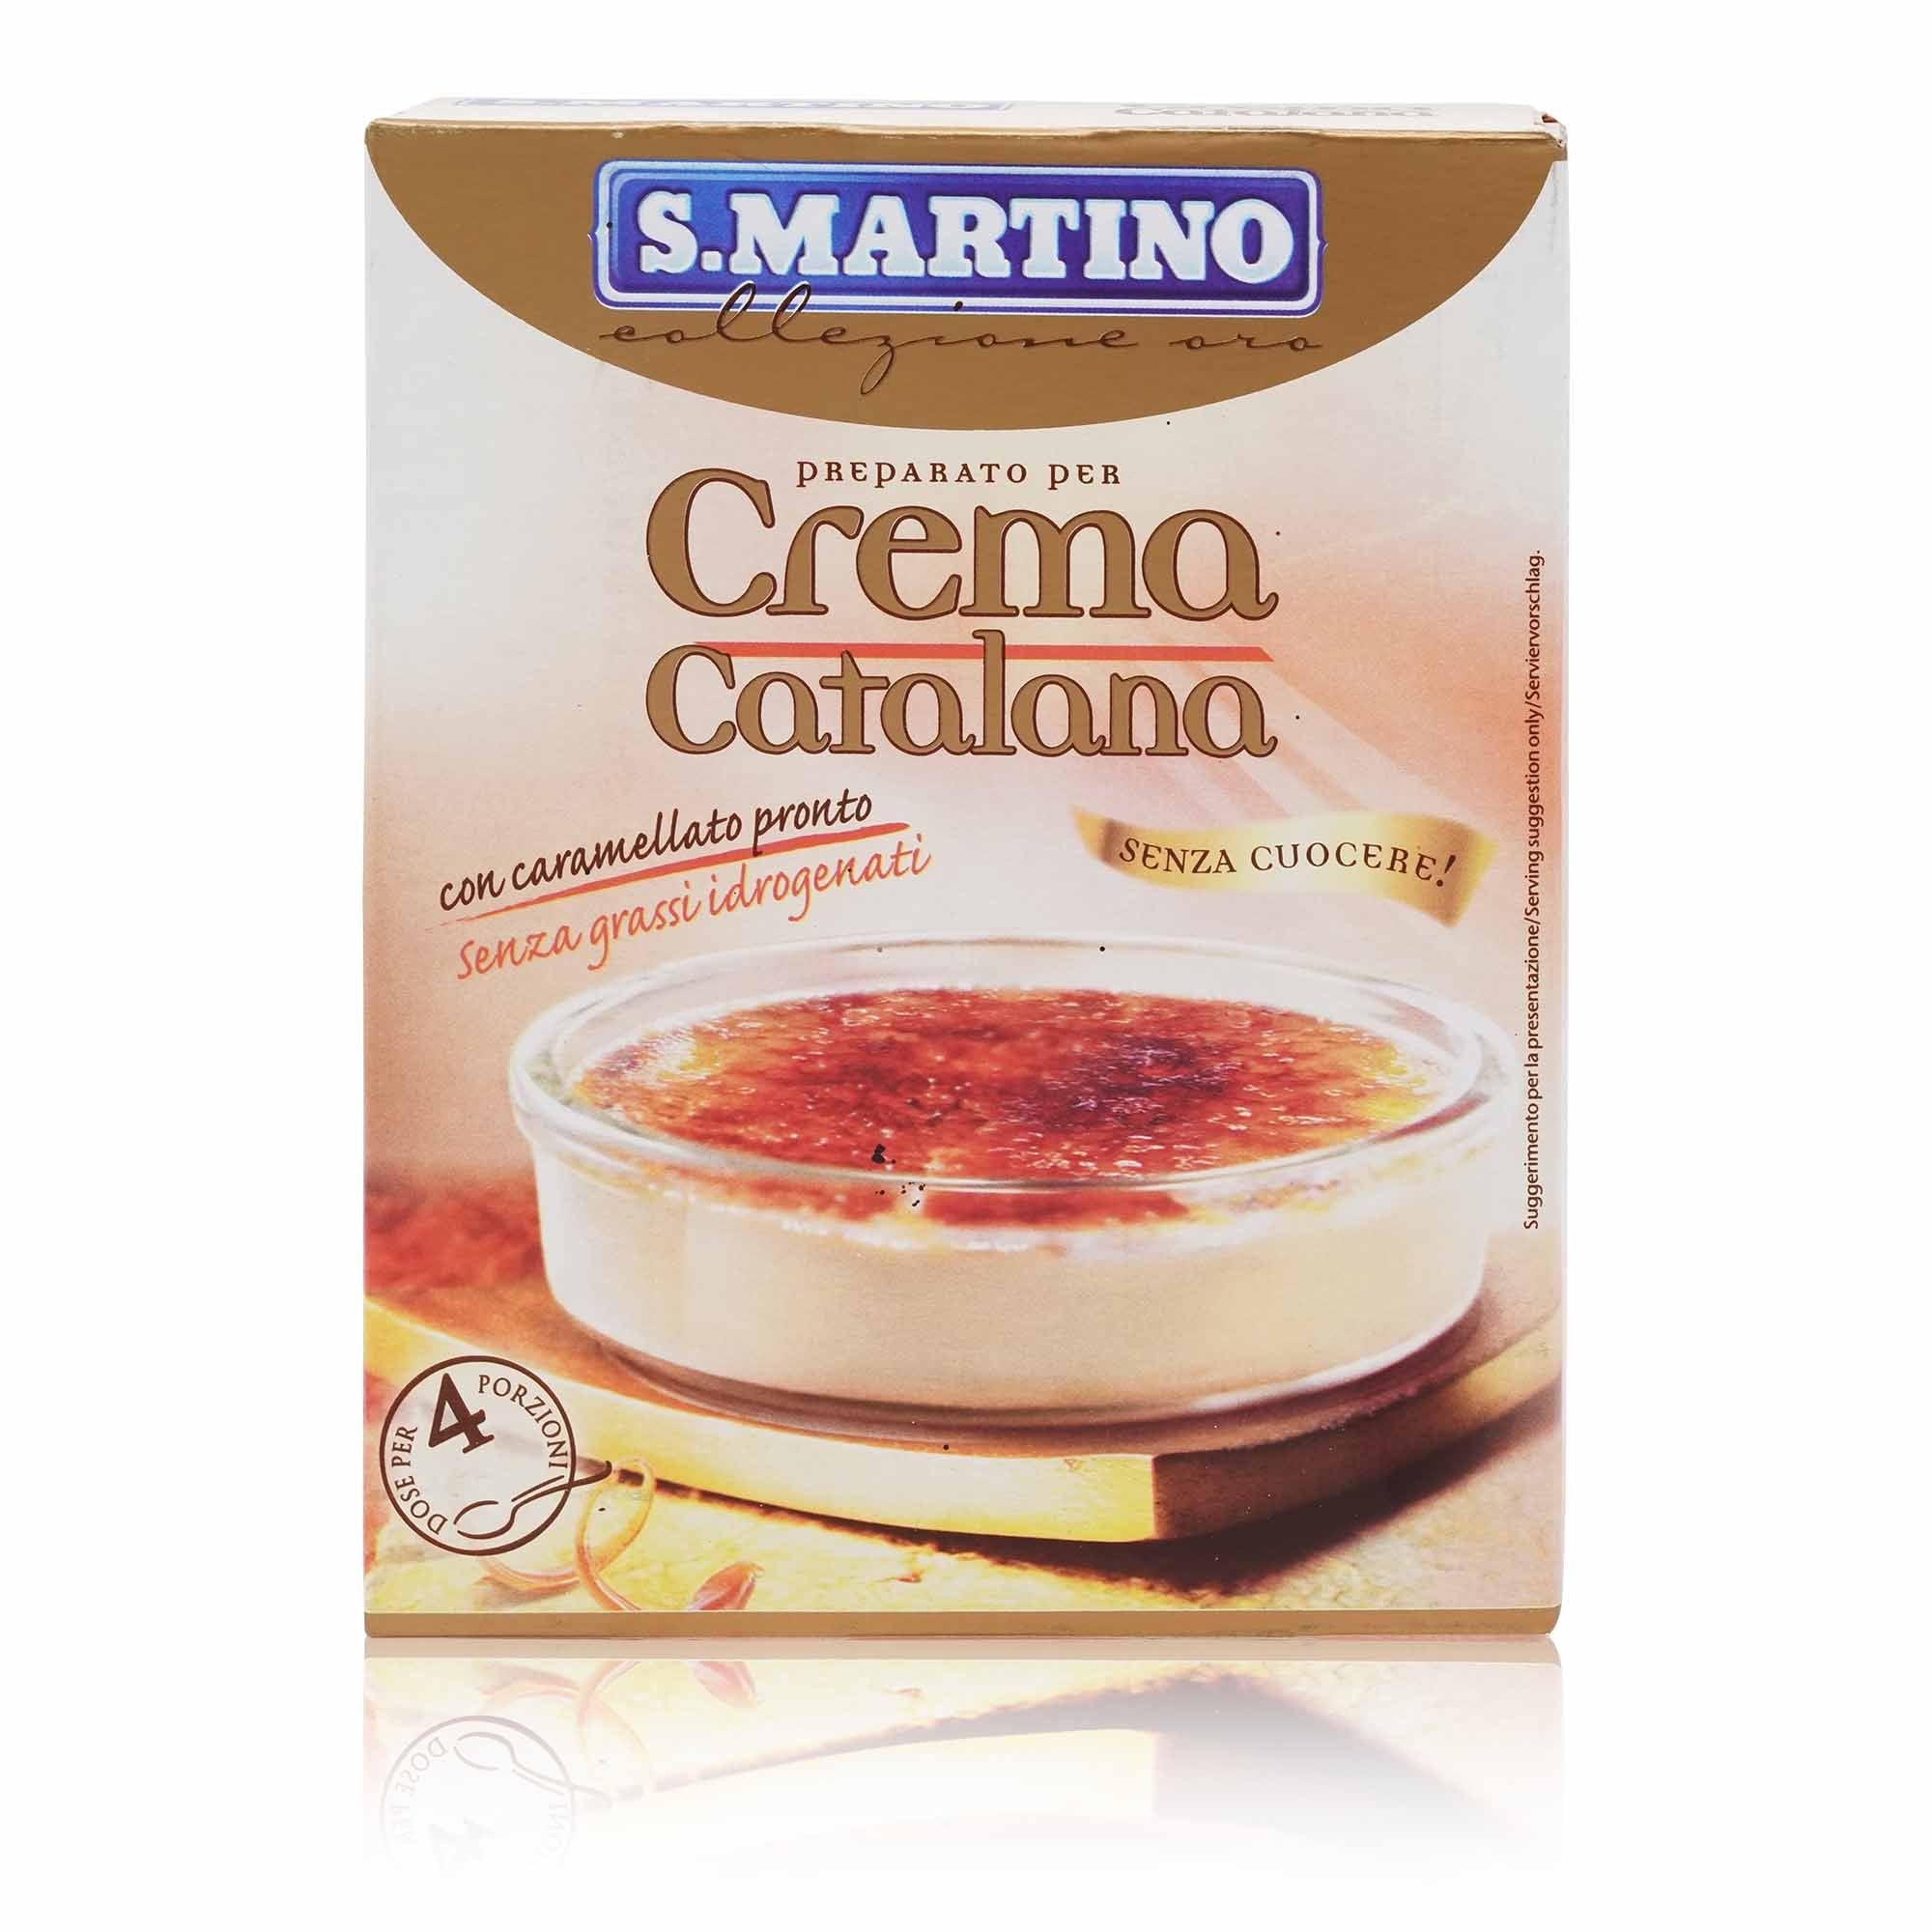 S.MARTINO Preparato Crema Catalana – Backmischung Creme Catalana - 0,097kg - italienisch-einkaufen.de